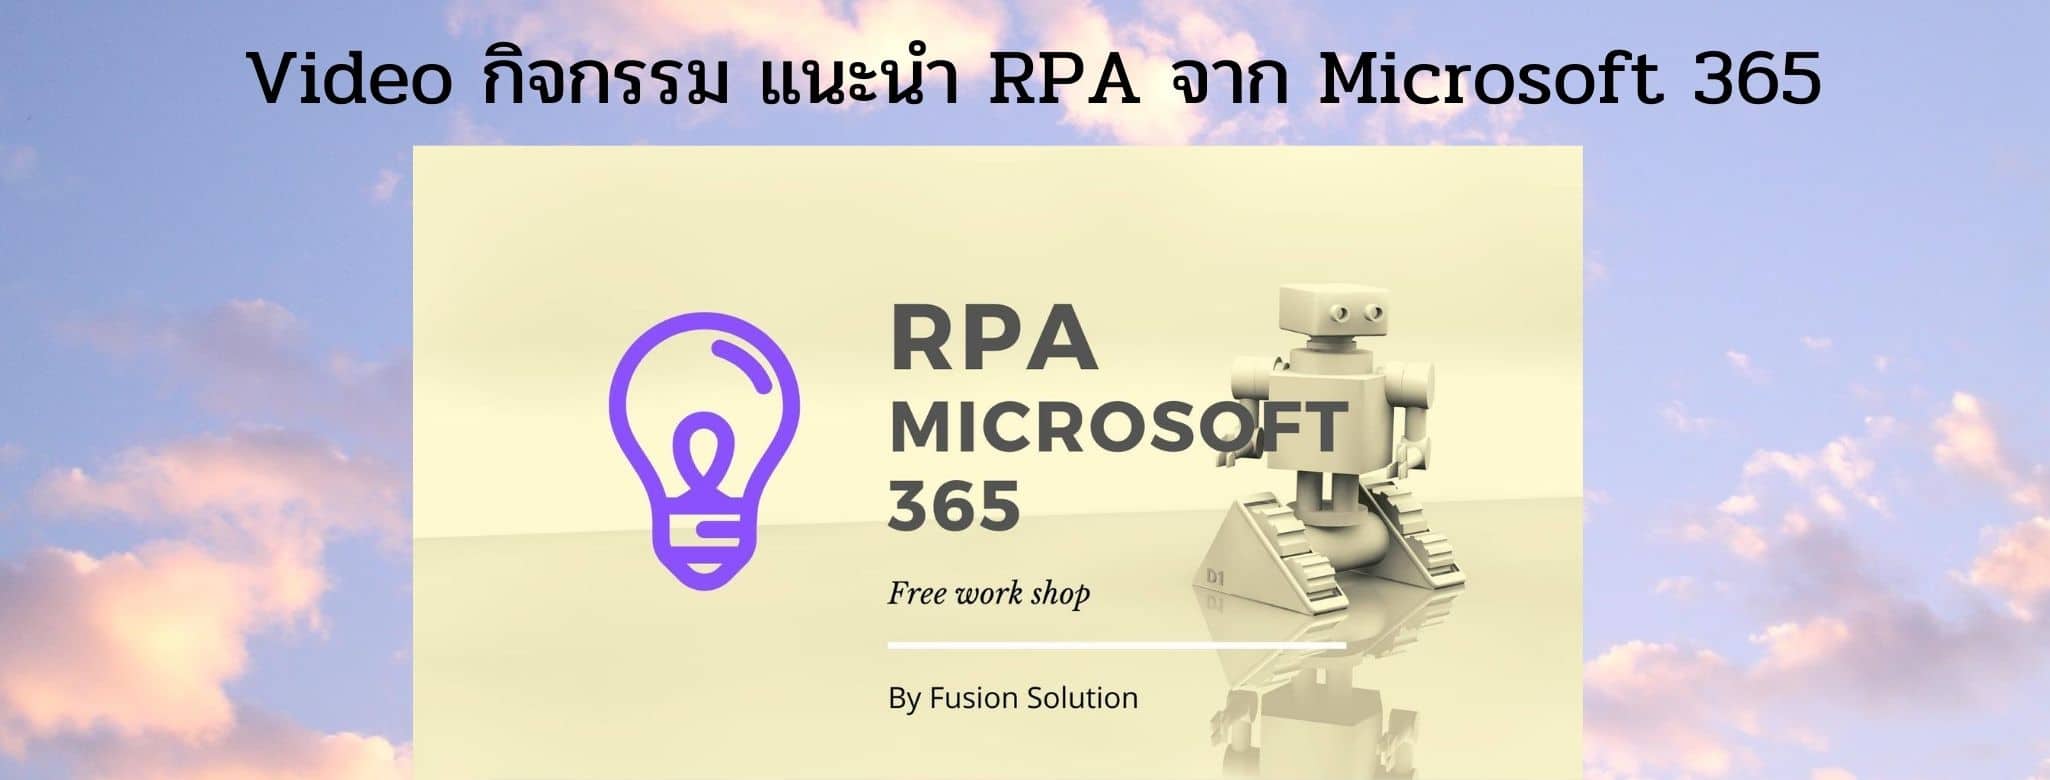 Video แนะนำ RPA จาก Microsoft 365